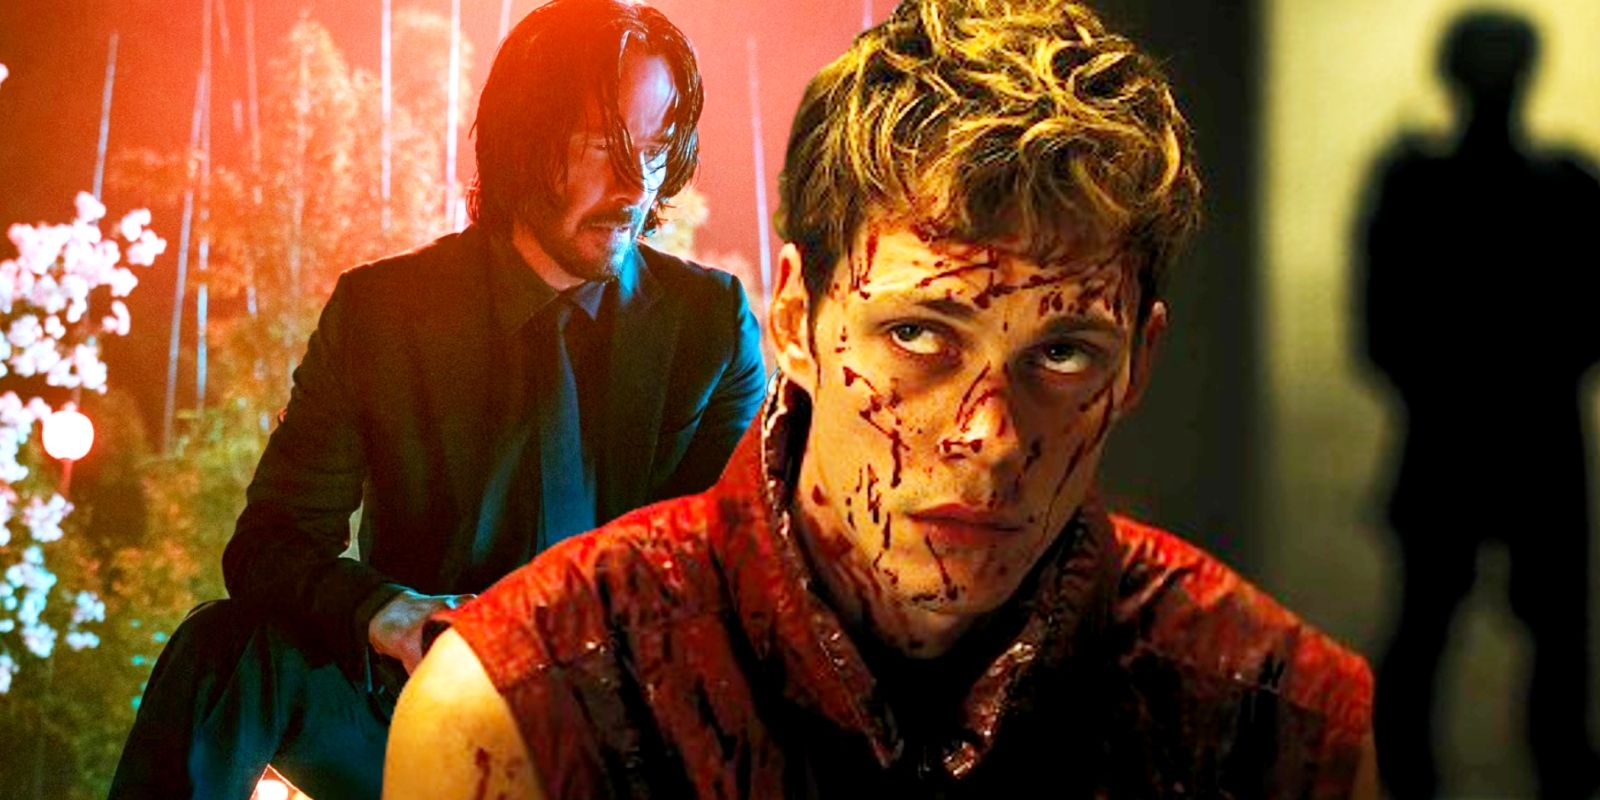 Bill Skarsgard bloodied up in Boys Kills World juxtaposed with Keanu Reeves in John Wick 4